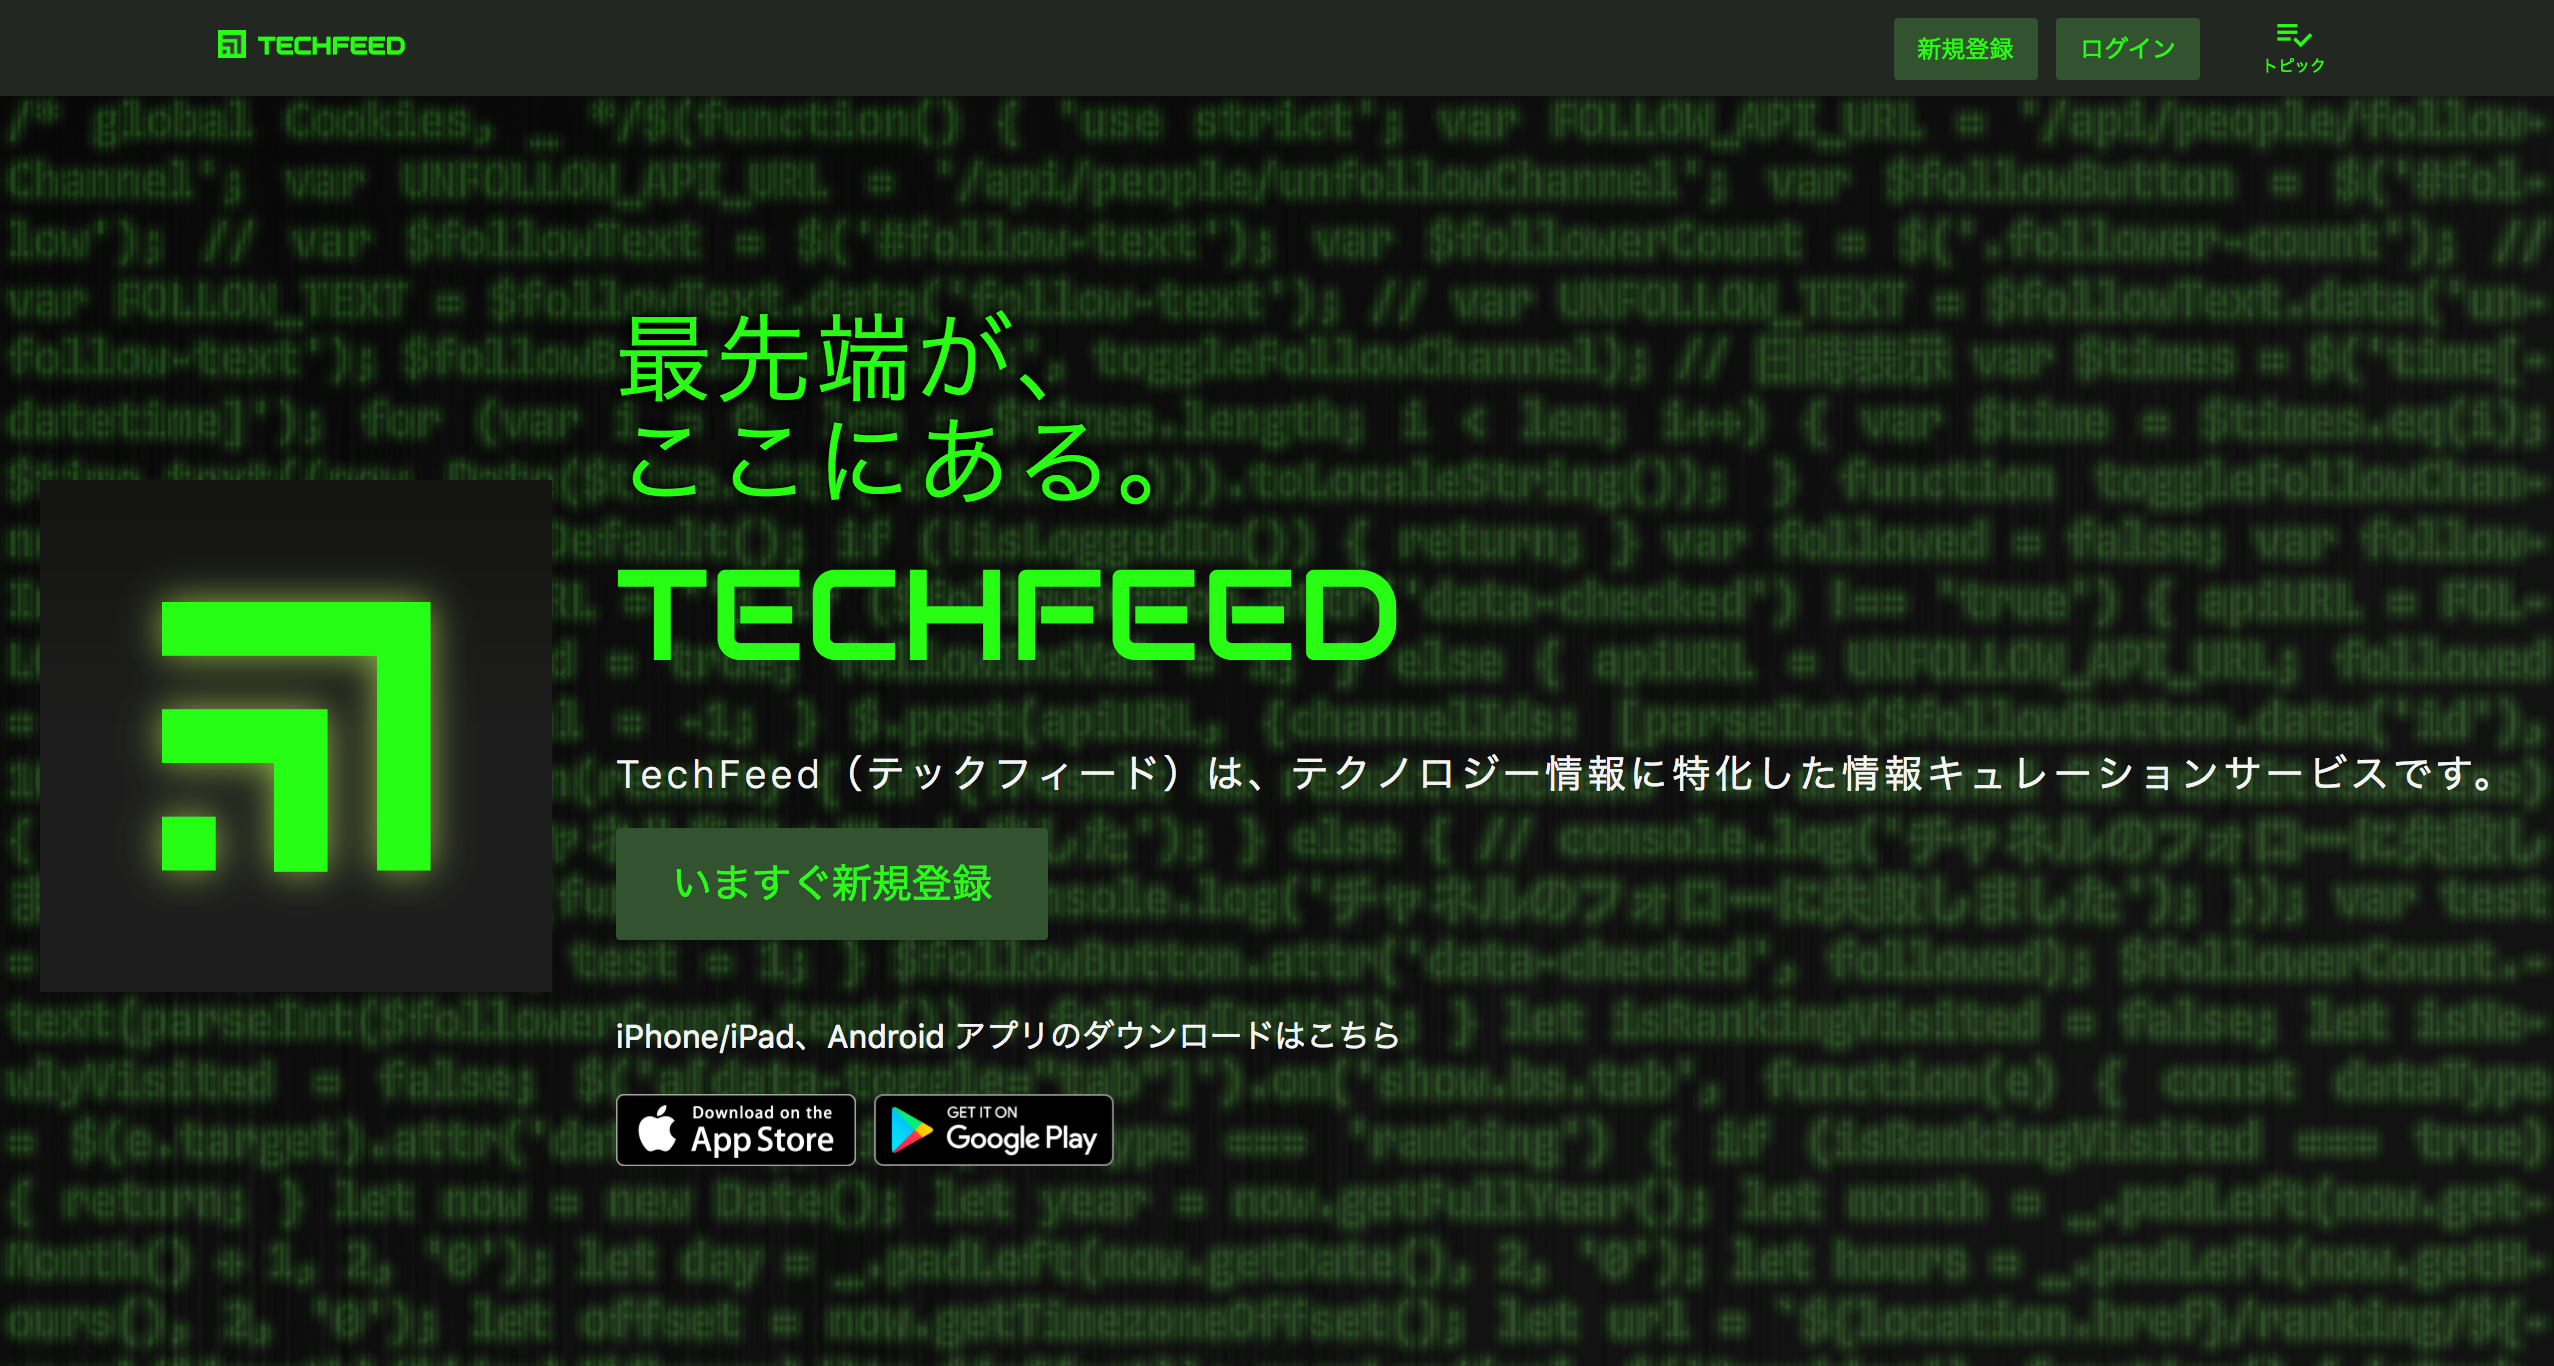 techfeed-p1